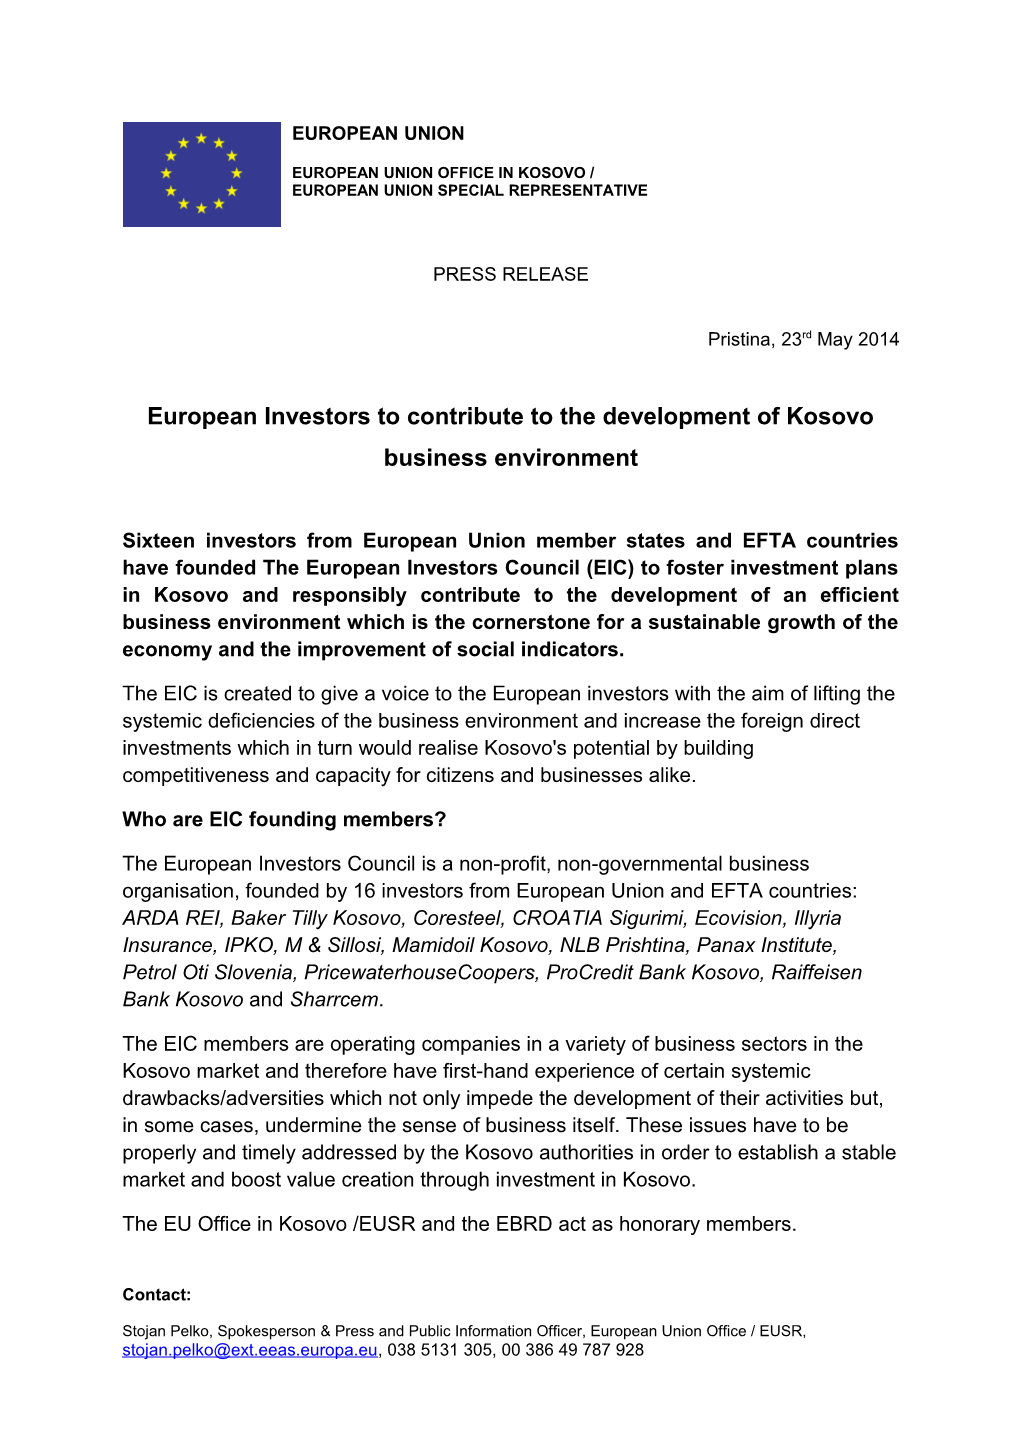 European Investors to Contribute to the Development of Kosovo Business Environment